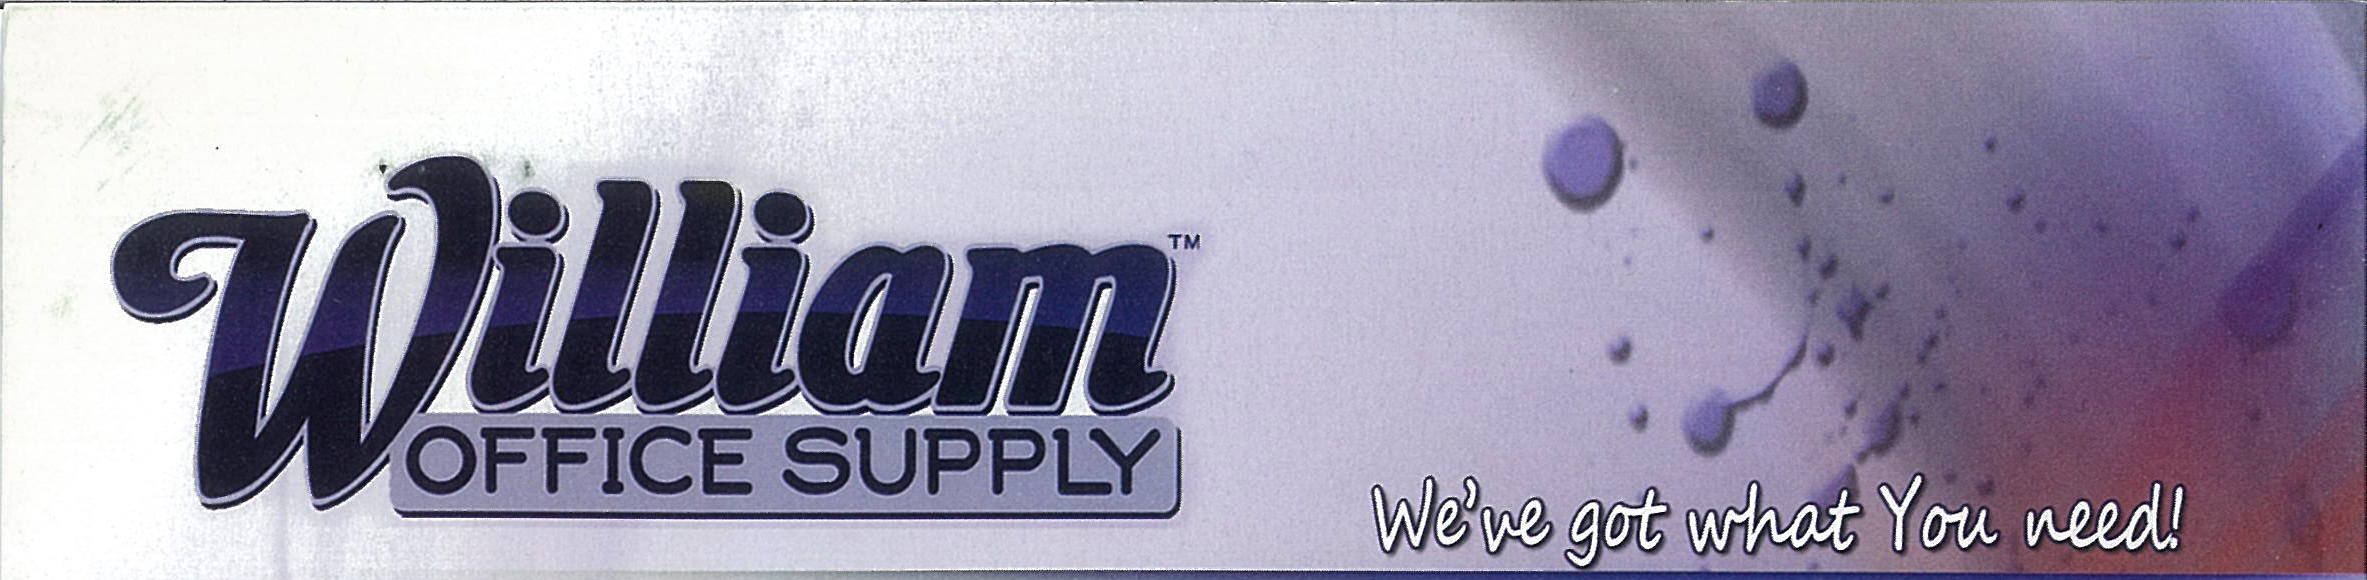 https://0201.nccdn.net/1_2/000/000/124/aae/william-office-supply-logo--1-.jpg